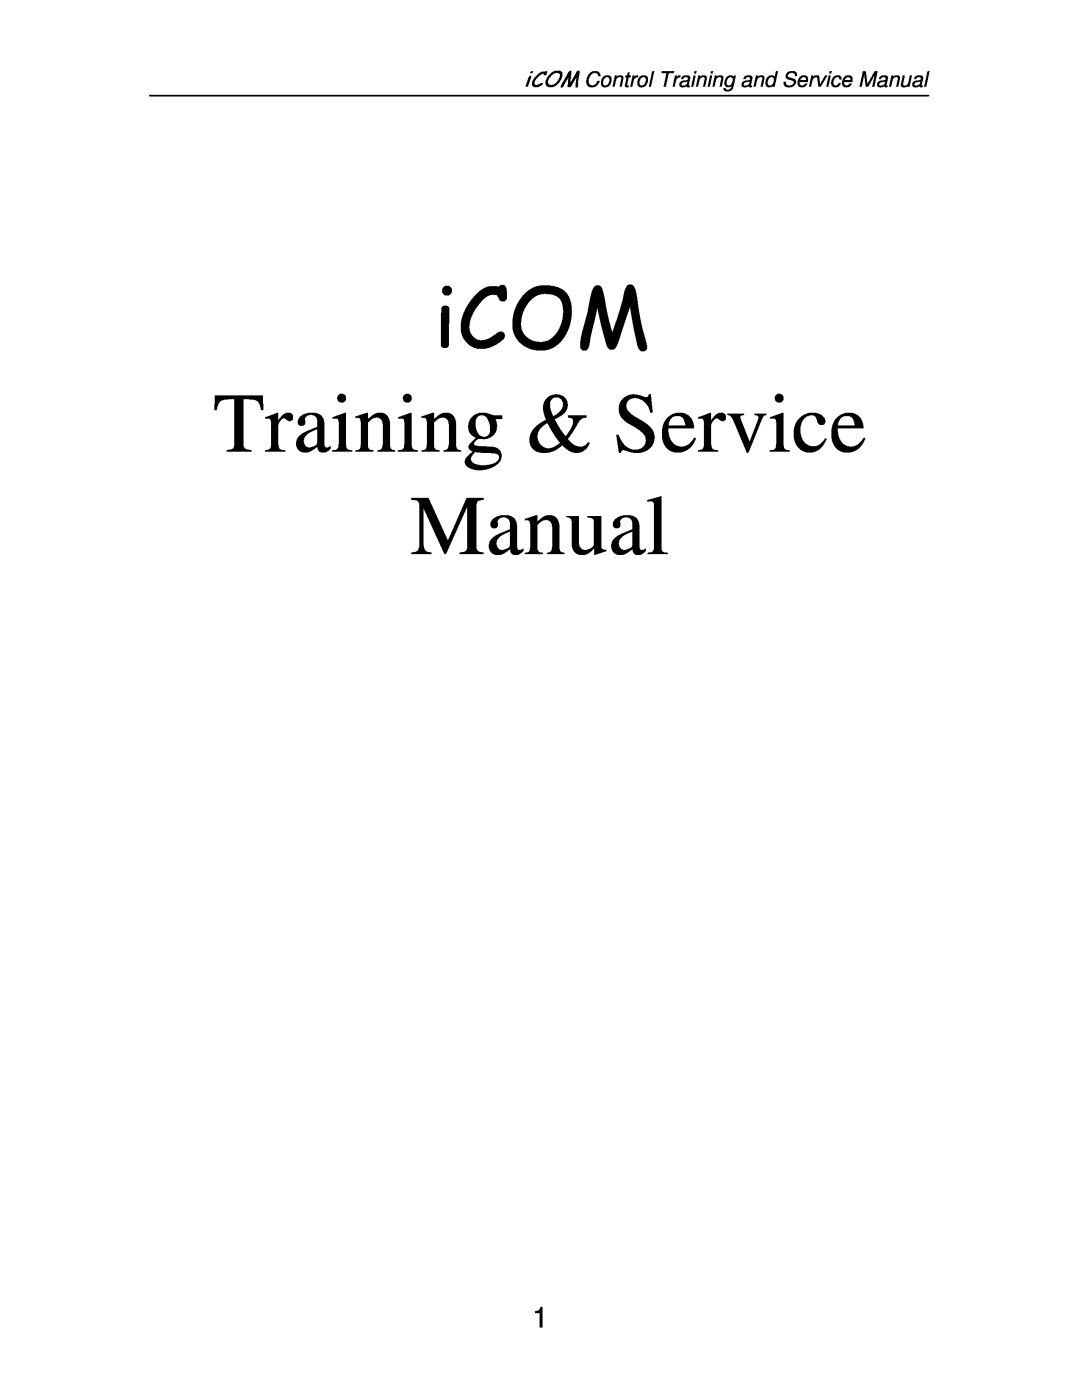 Liebert TM-10098 service manual Training & Service Manual, iCOM Control Training and Service Manual 